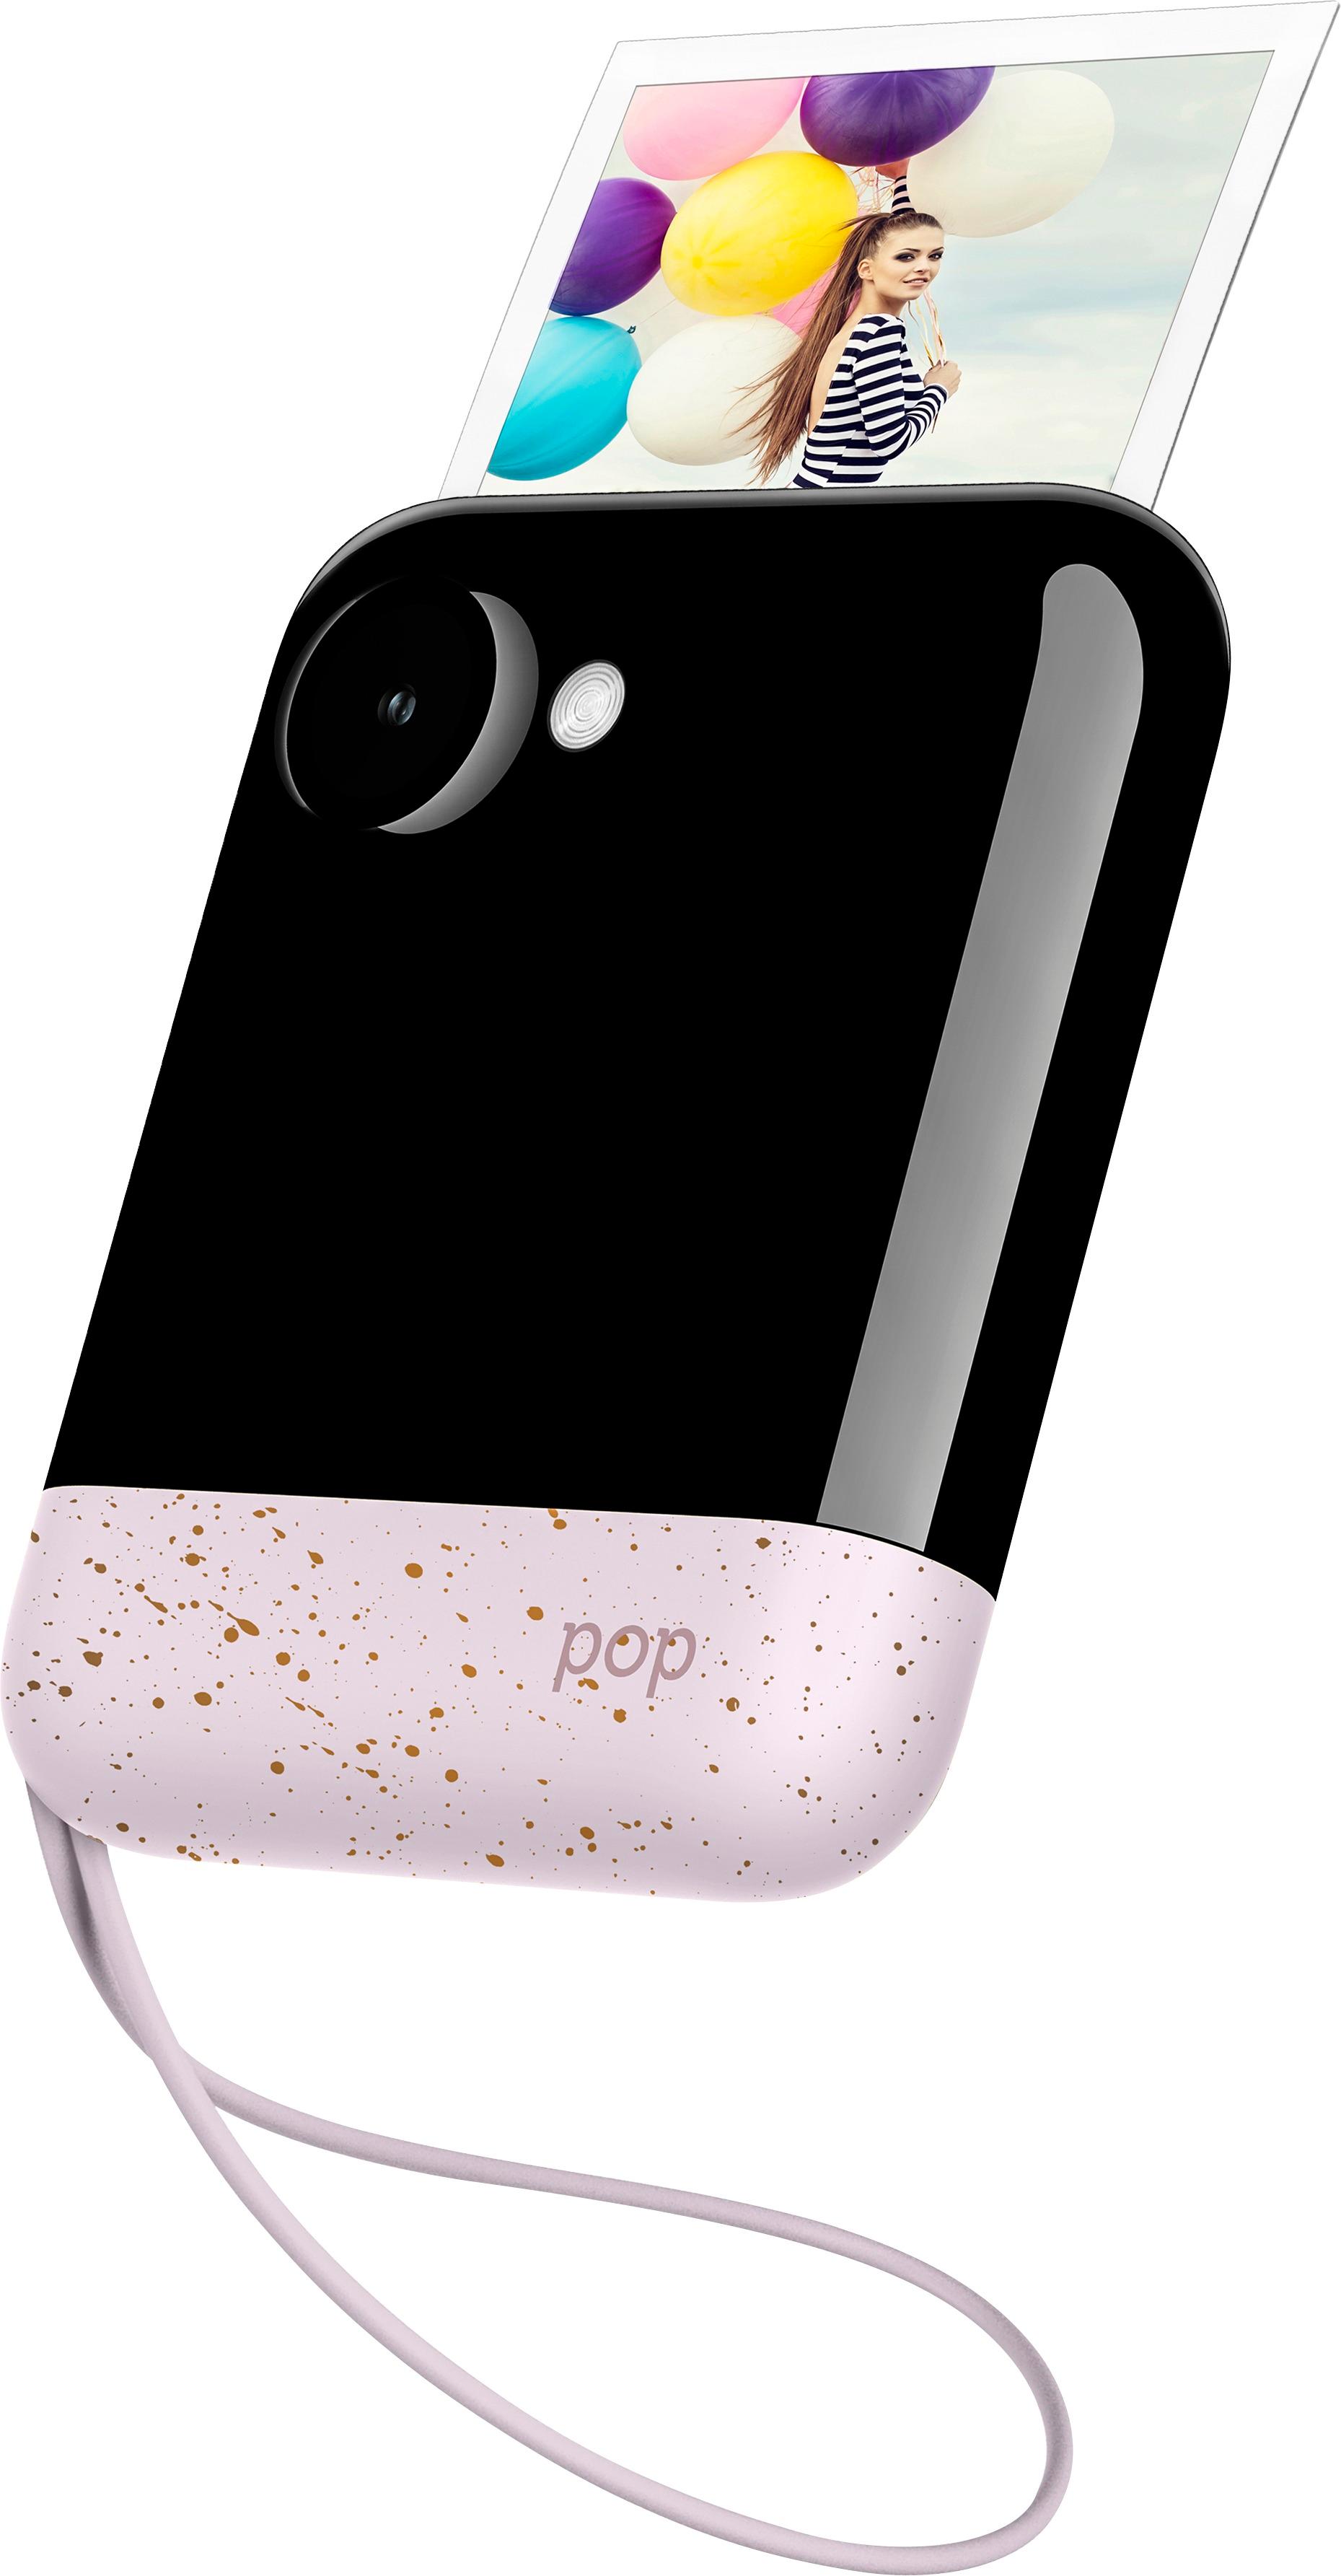 Polaroid Pop Digital Camera Speckled Pink POLPOP1SP - Best